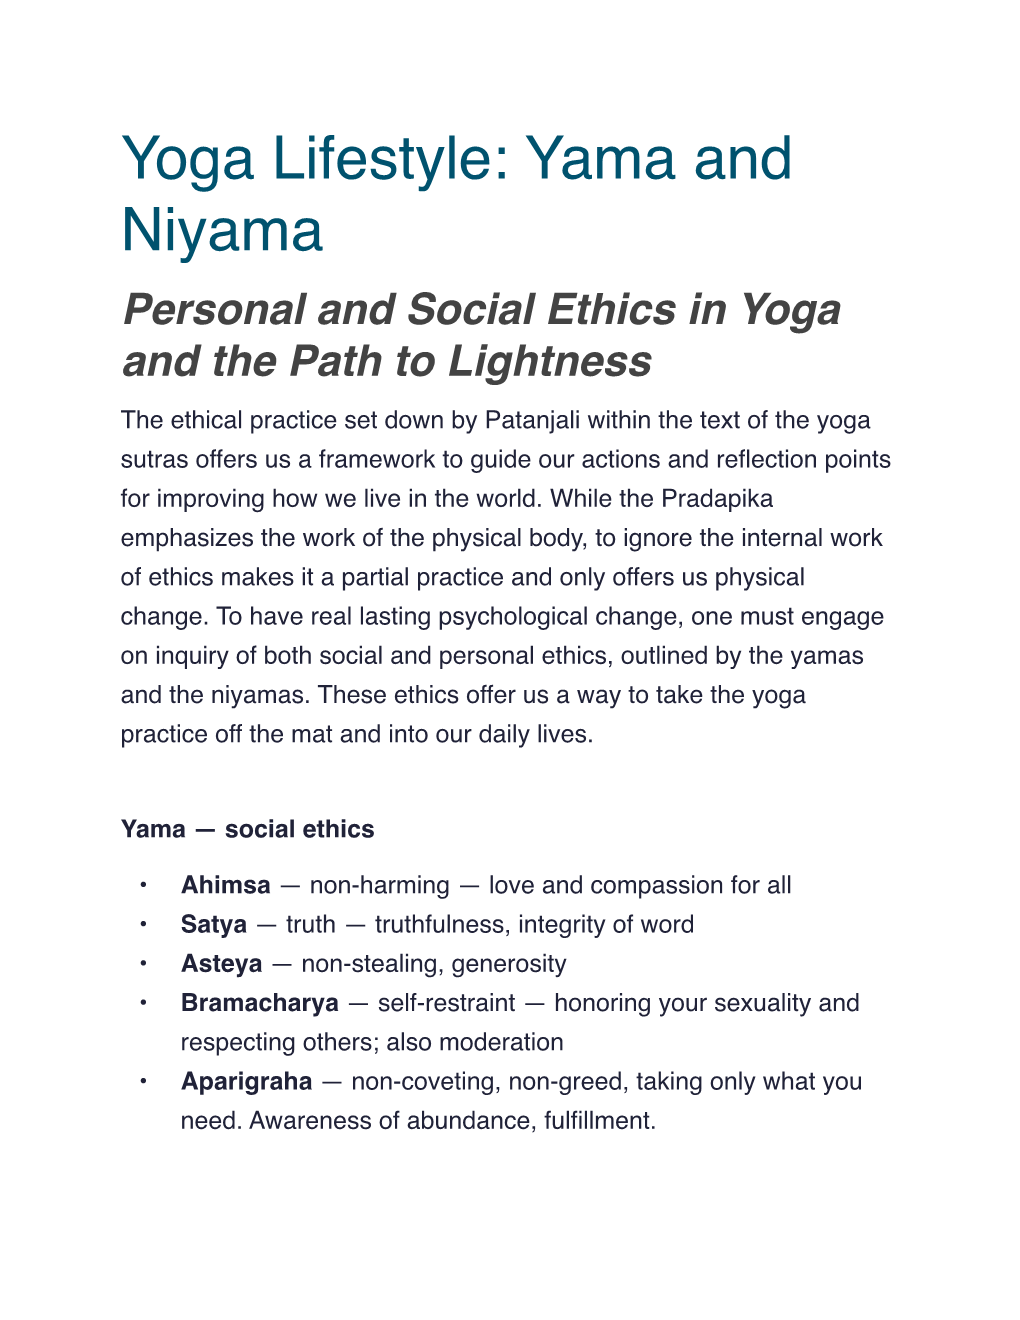 Yoga Lifestyle: Yama and Niyama